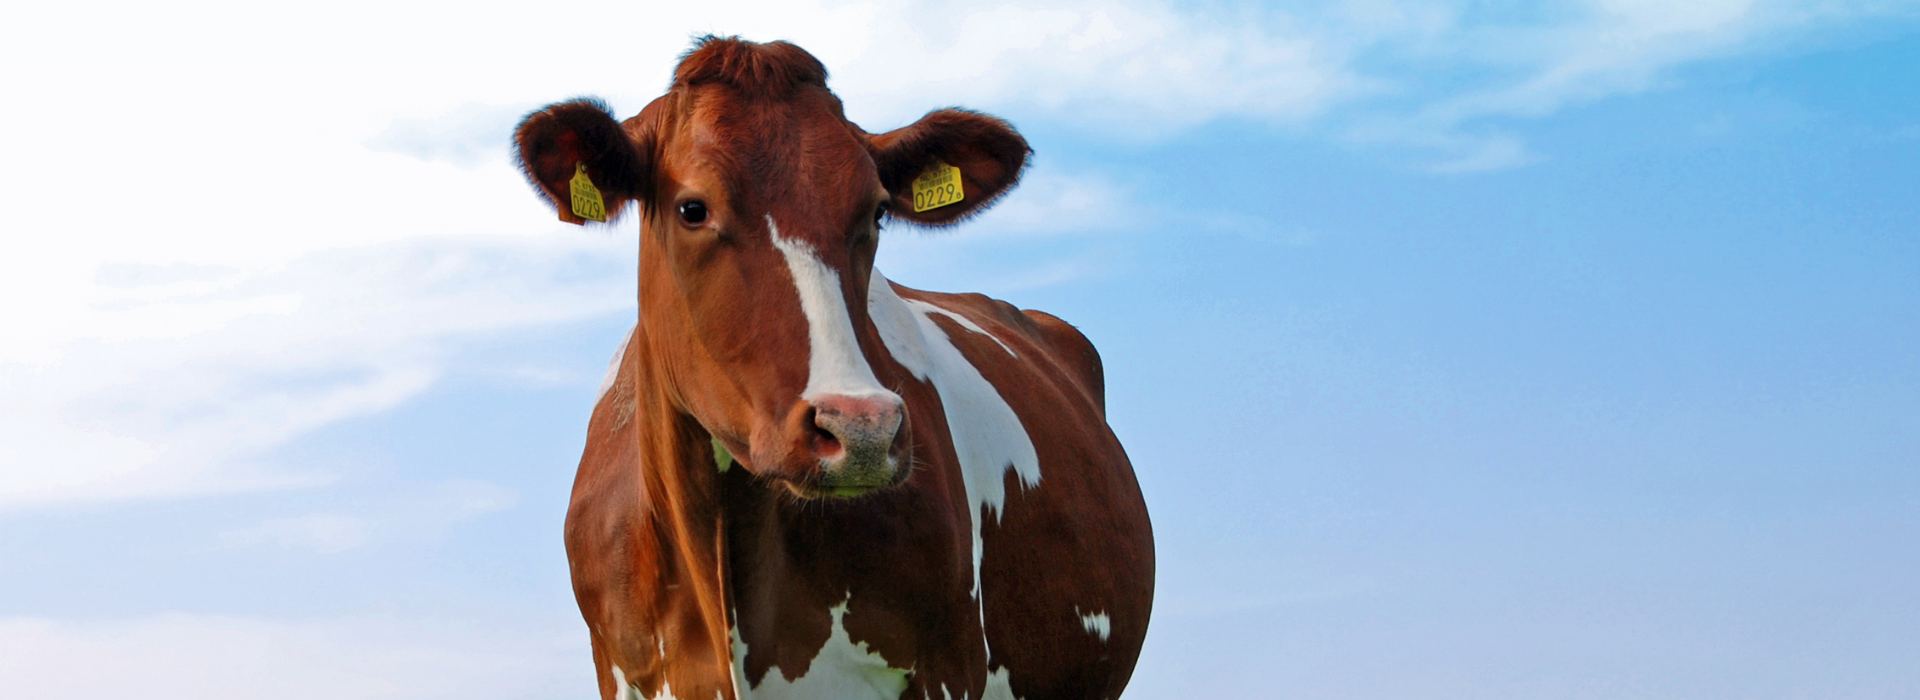 Roodbonte Holstein koe - Nederland 